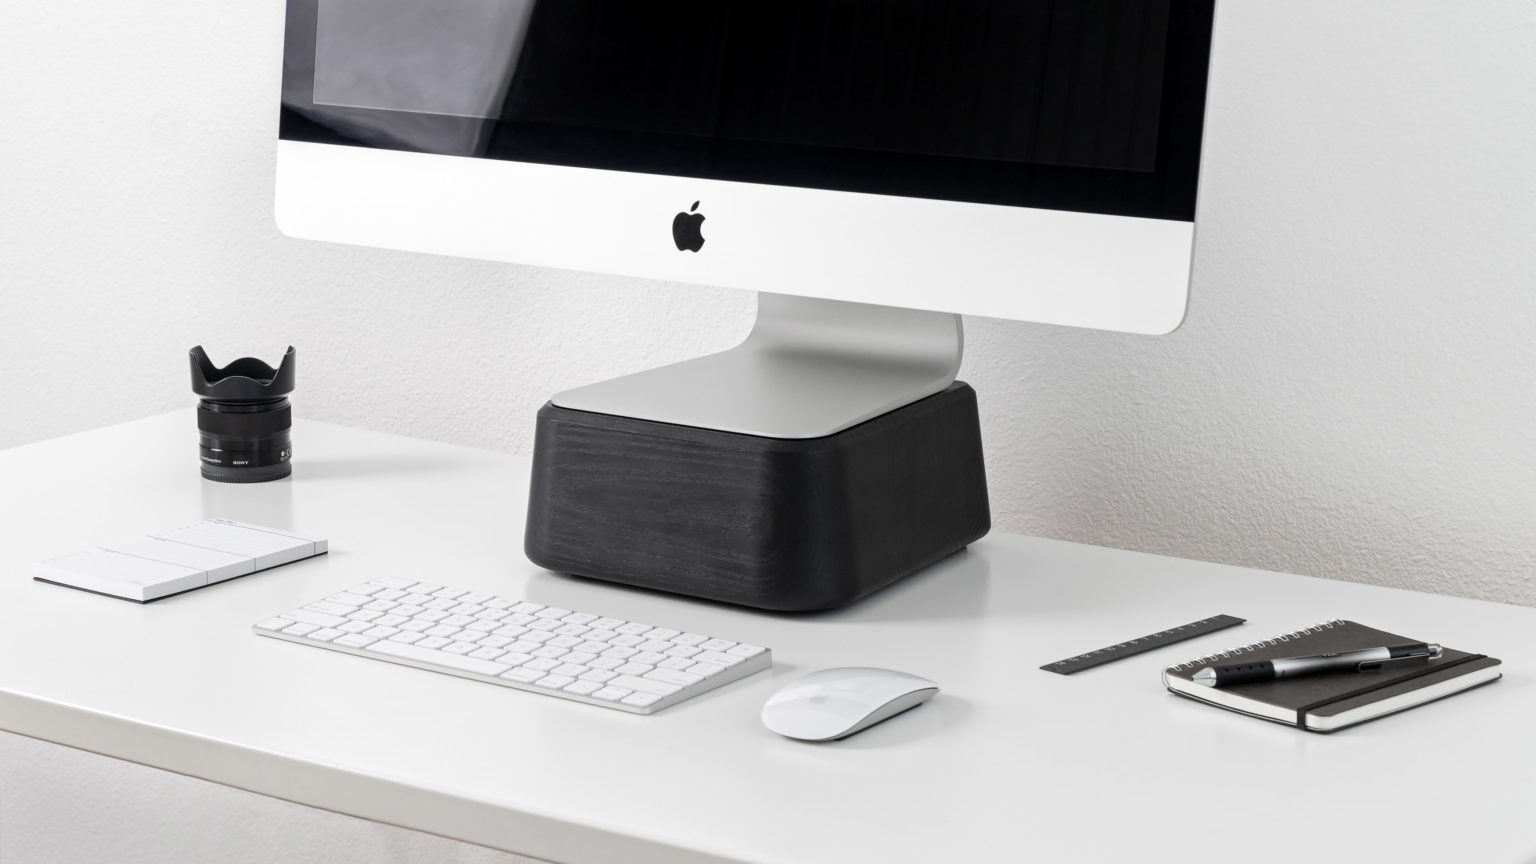 Base for iMac makes your desktop more ergonomic.